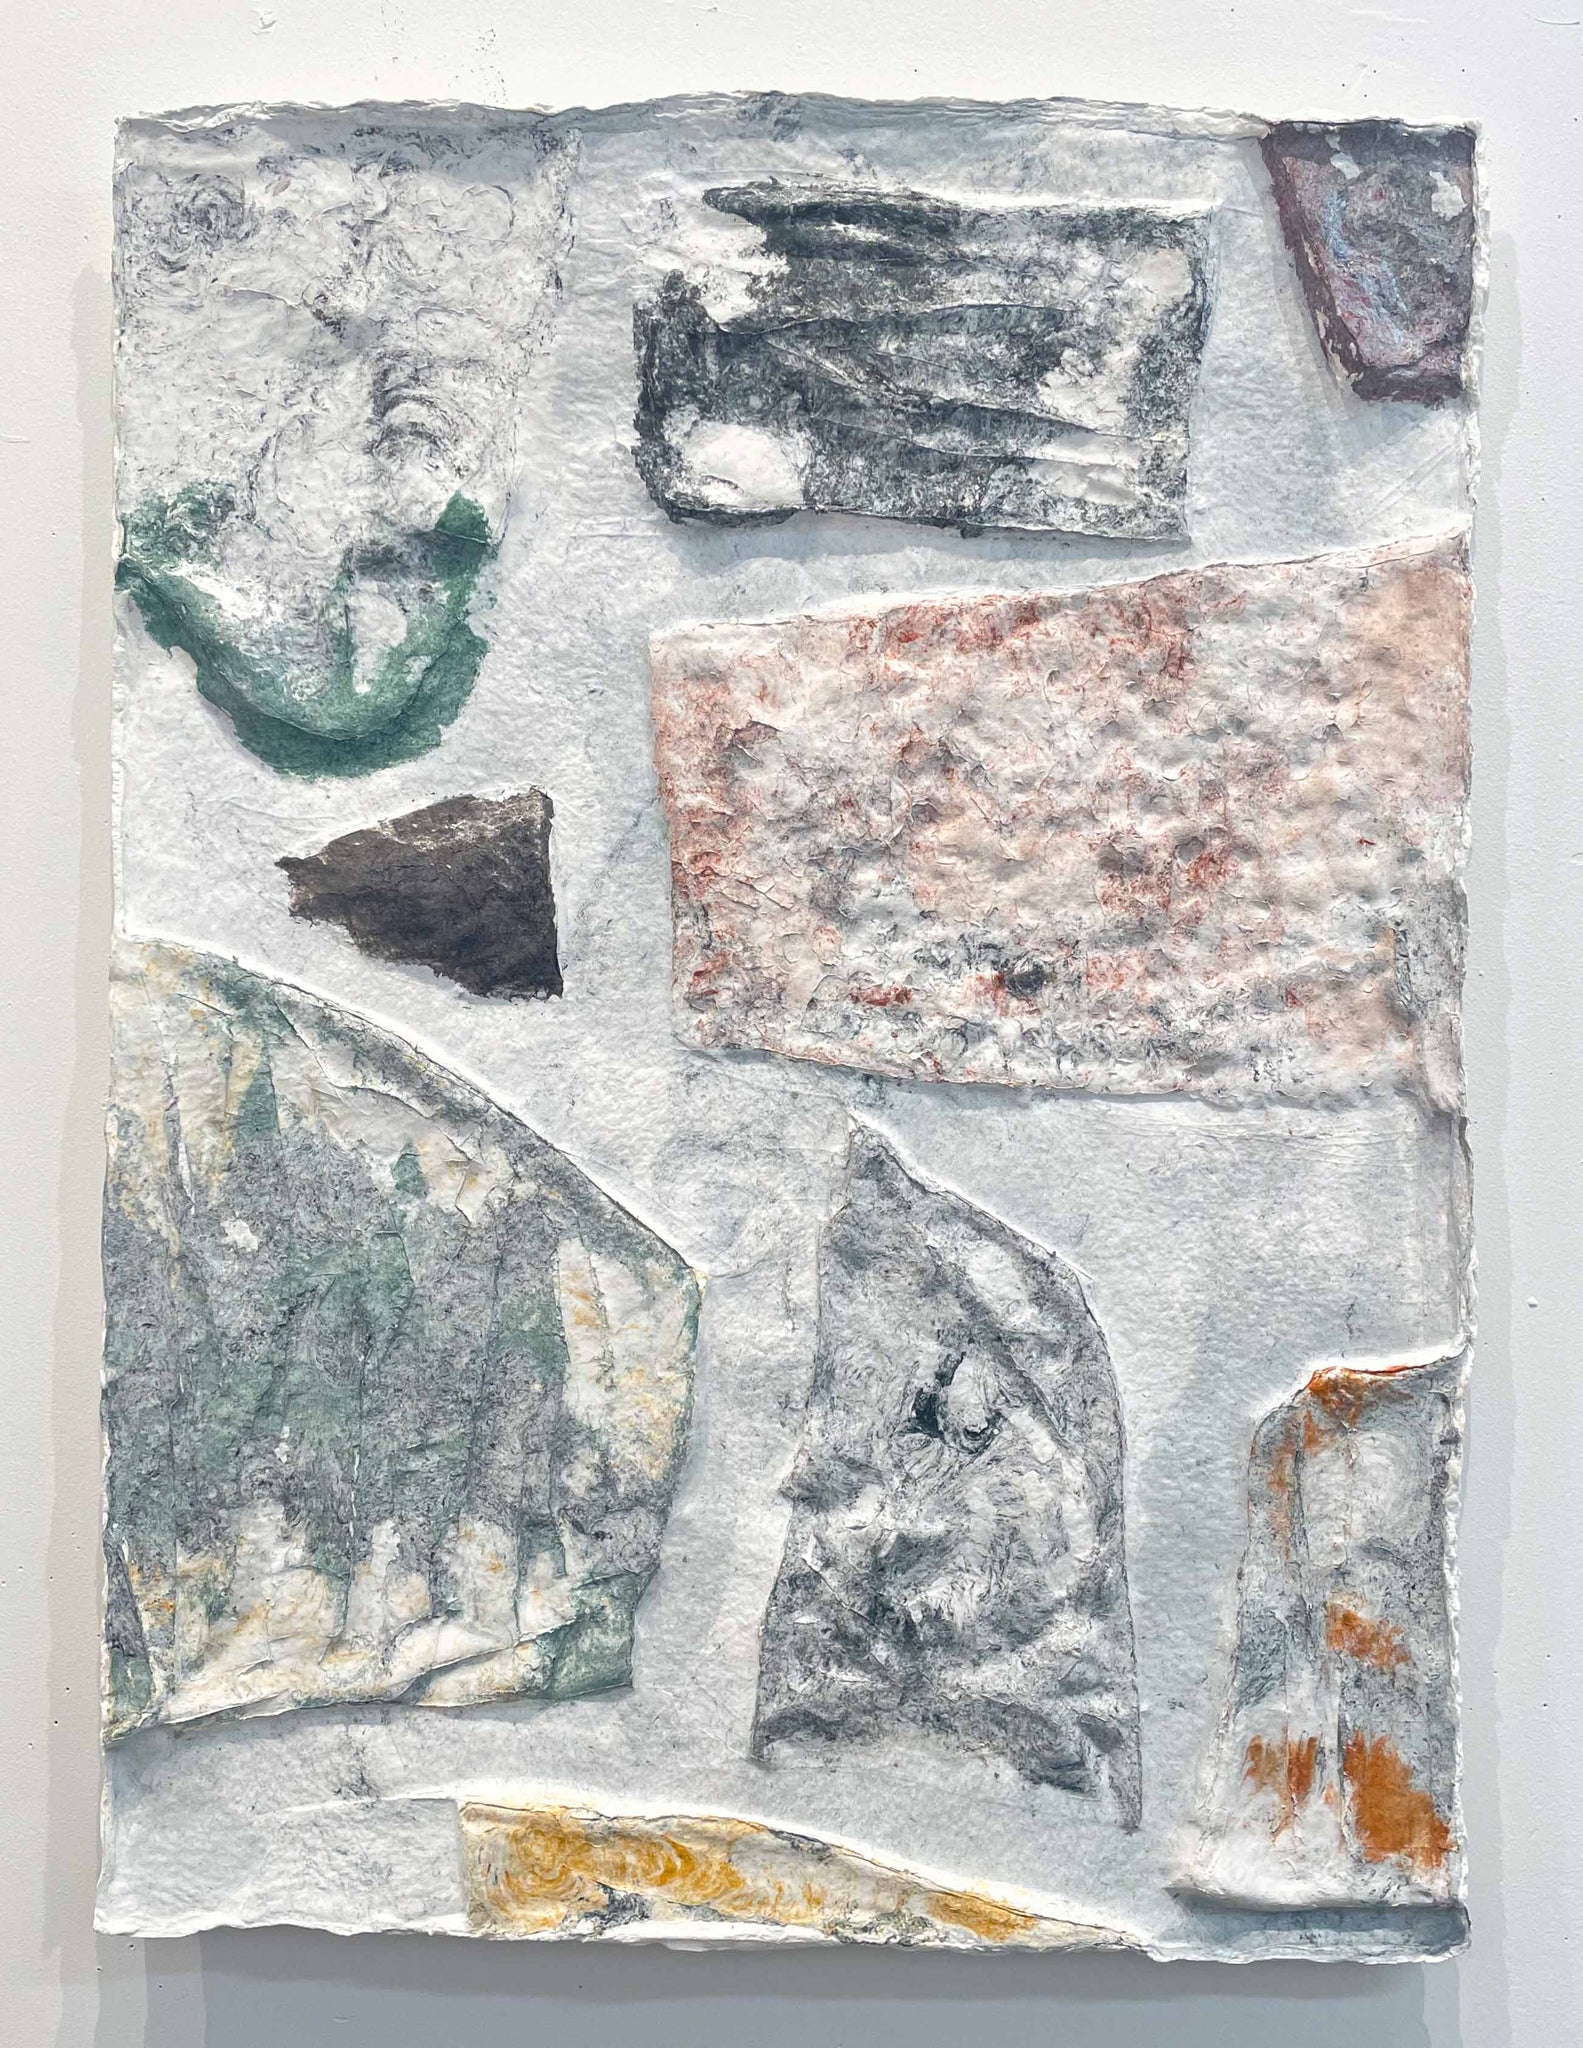 Stone Simulation (3), 2015